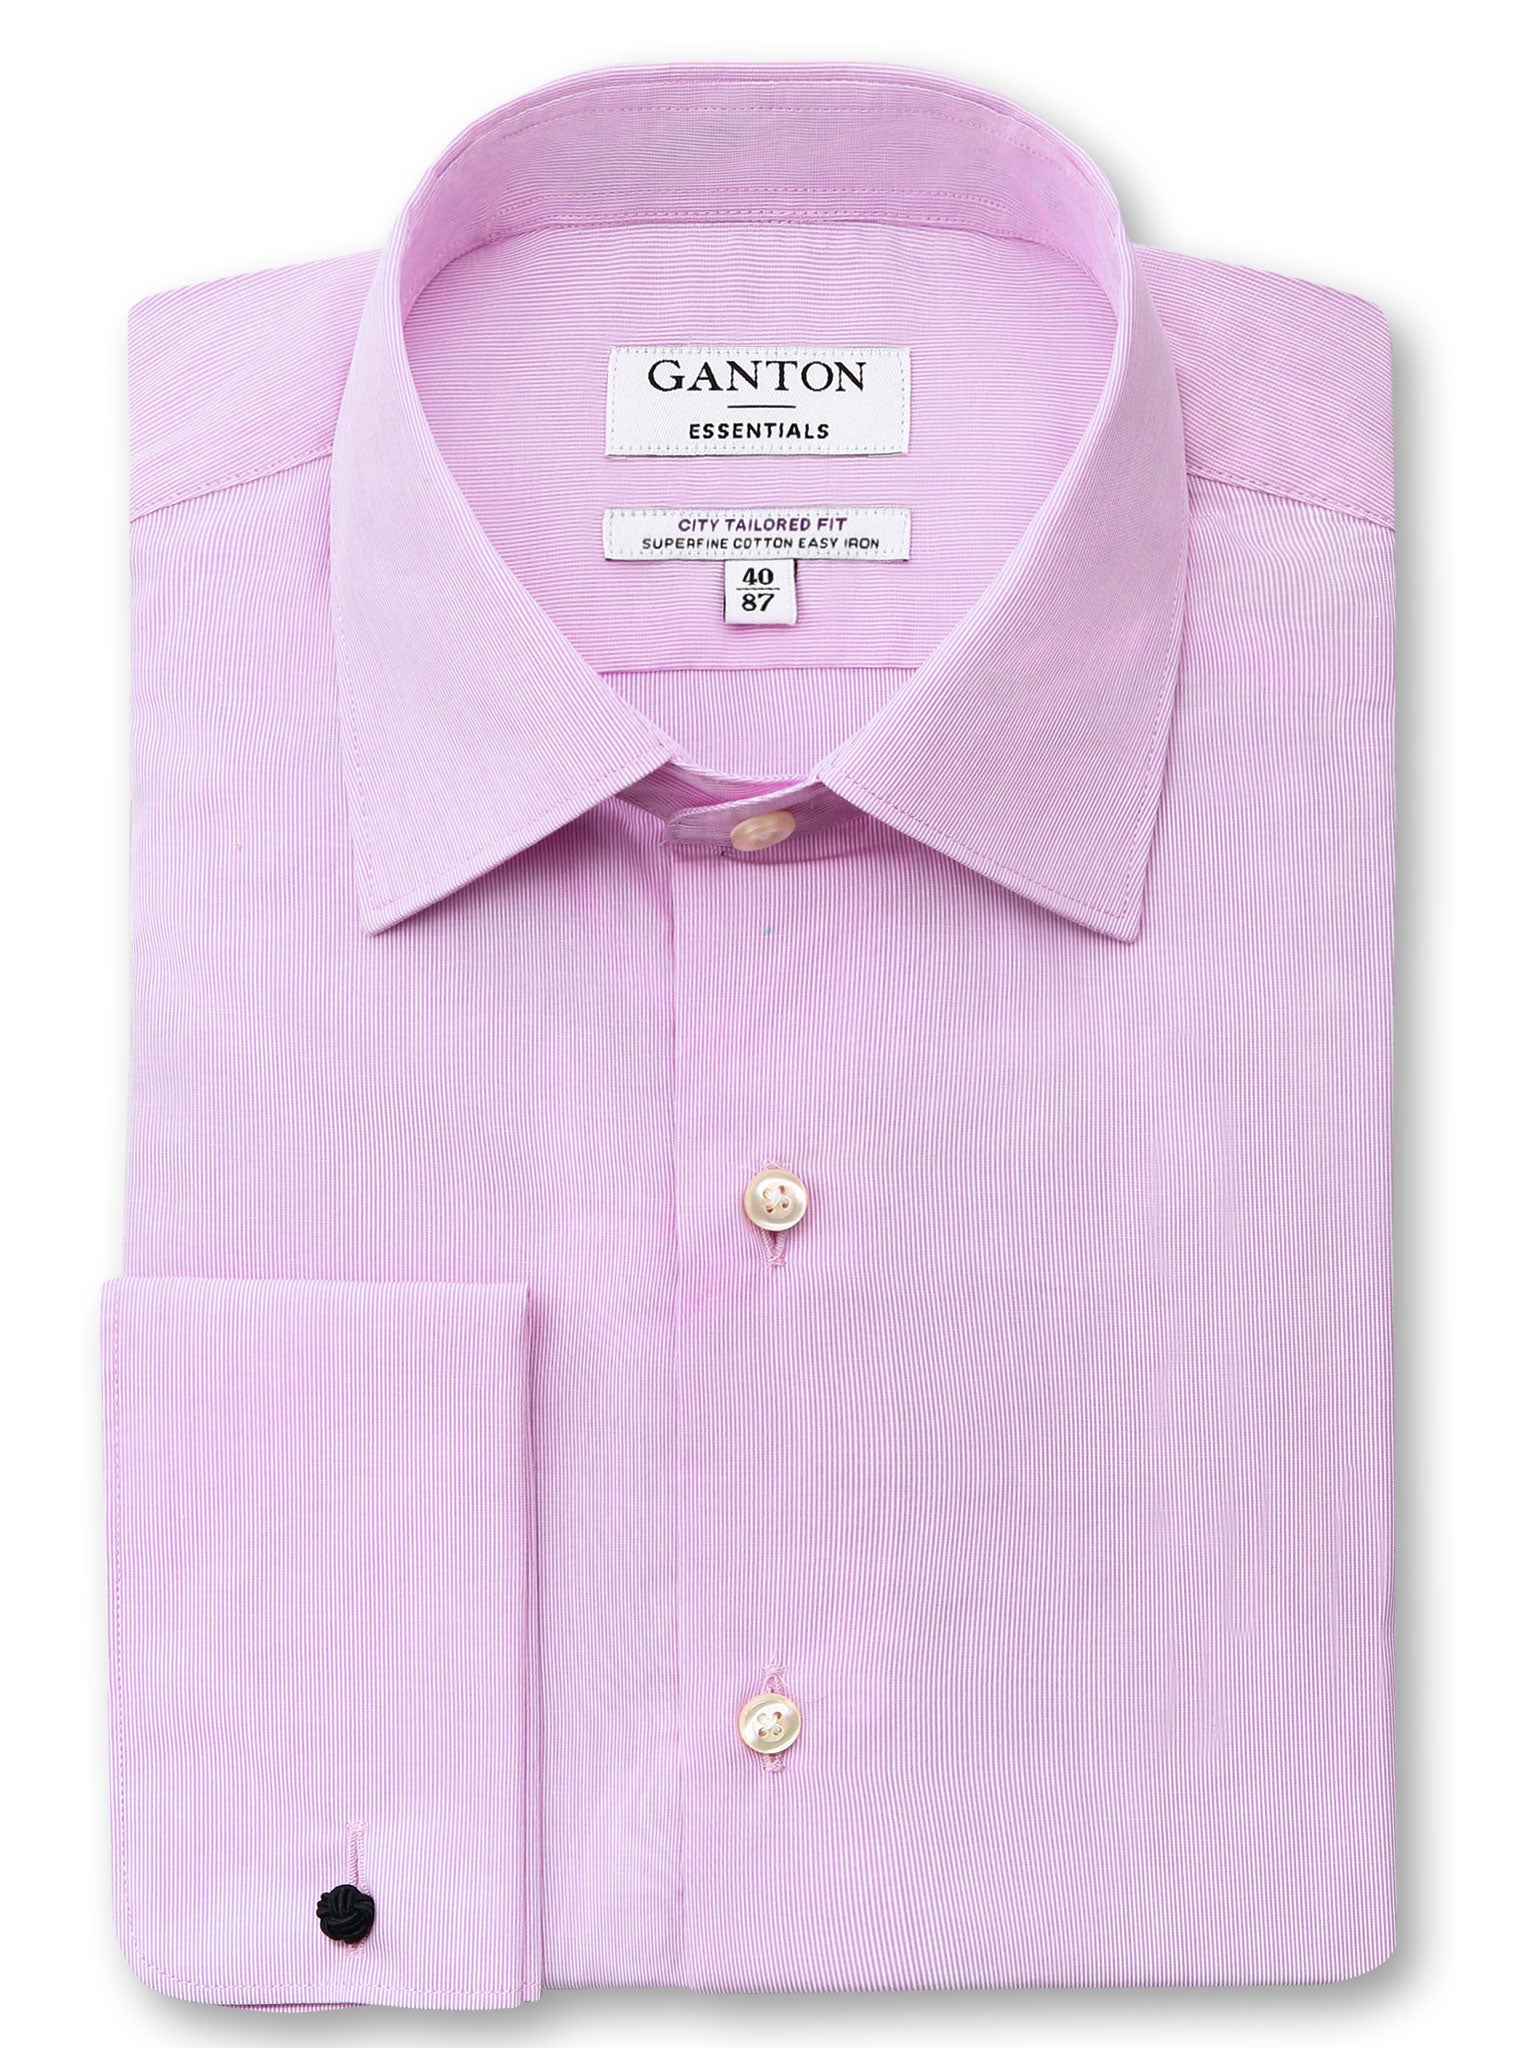 Ganton - City Tailored Fit